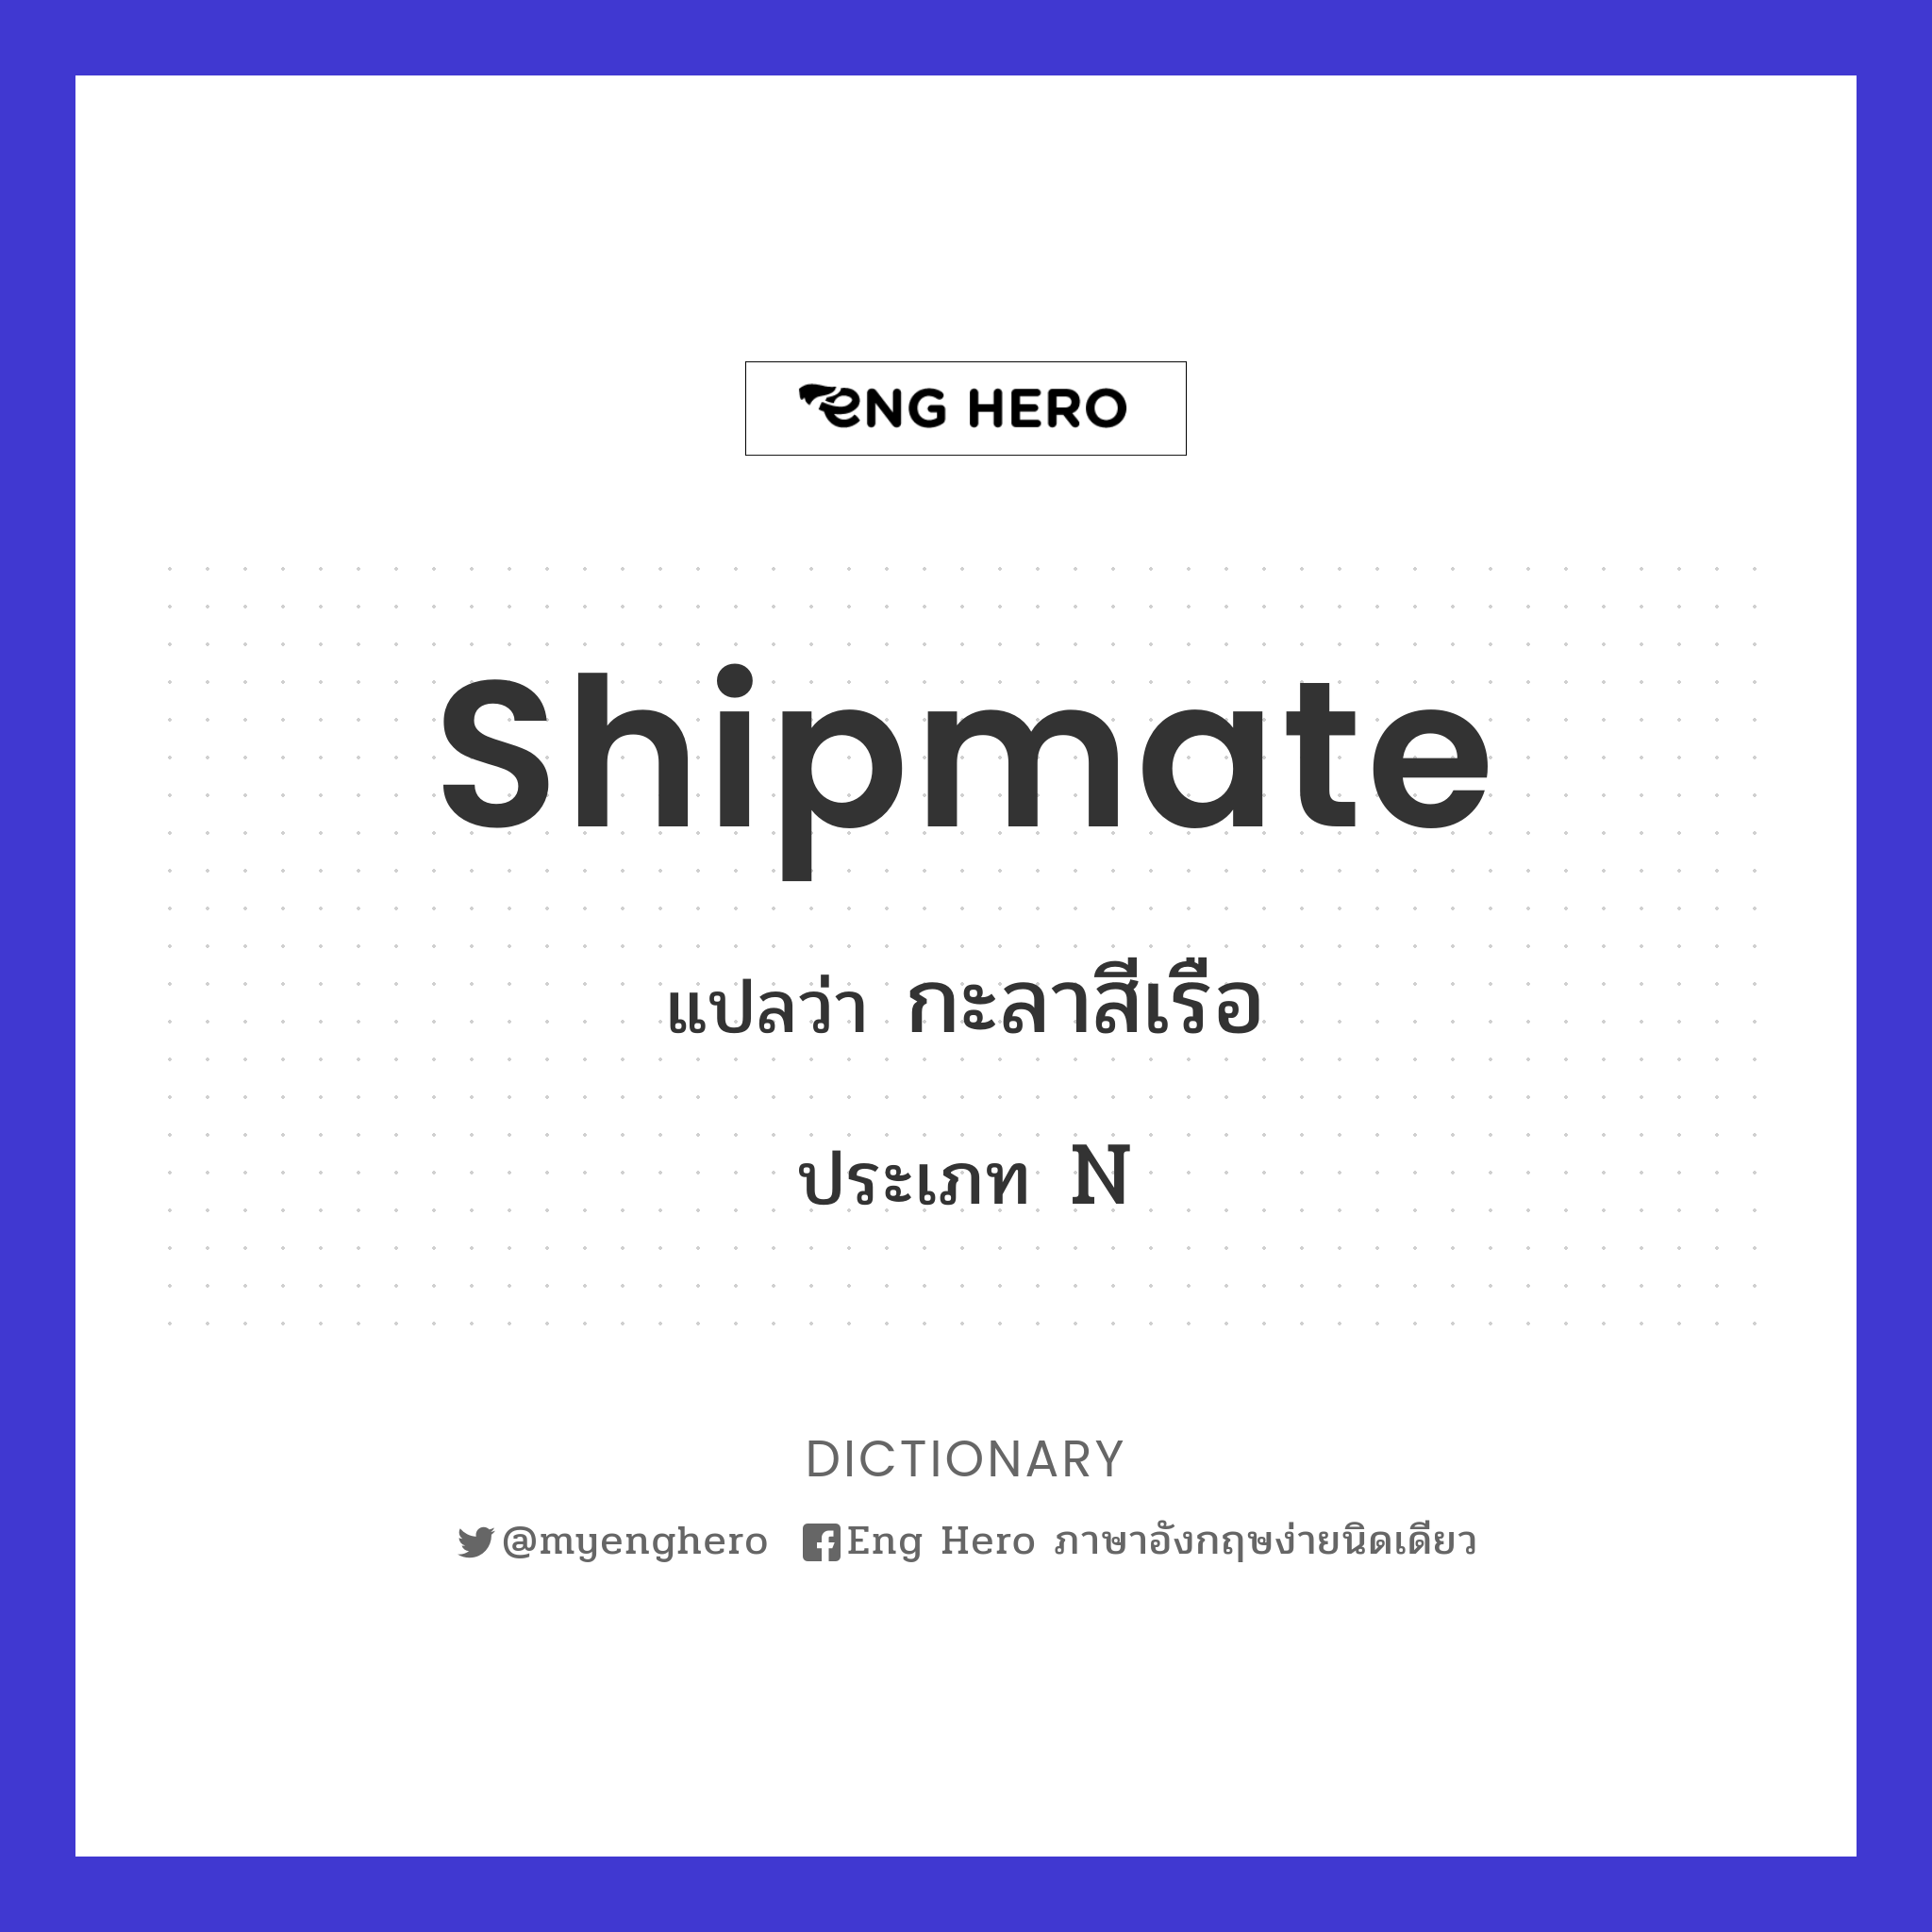 shipmate